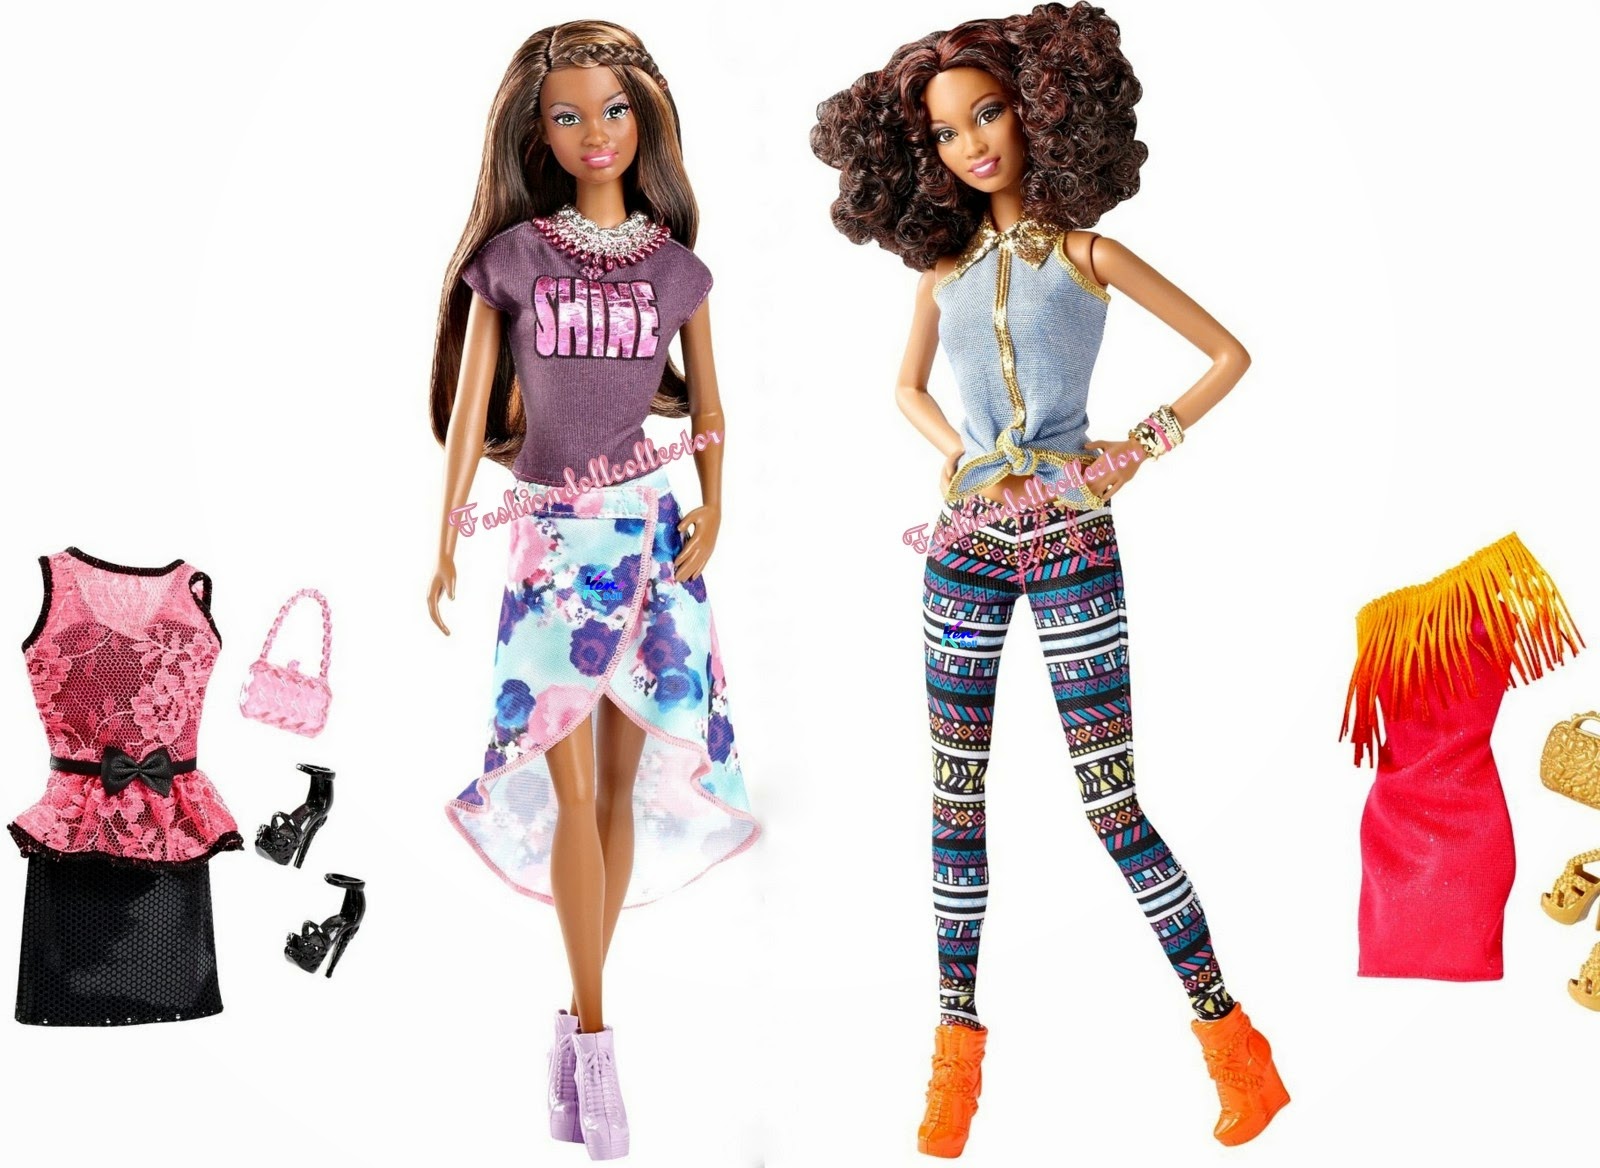 Как одеваются барби. Куклы Барби фашионистас 2014. Barbie Fashionistas Raquelle. Одежда для Барби. Барби мода.